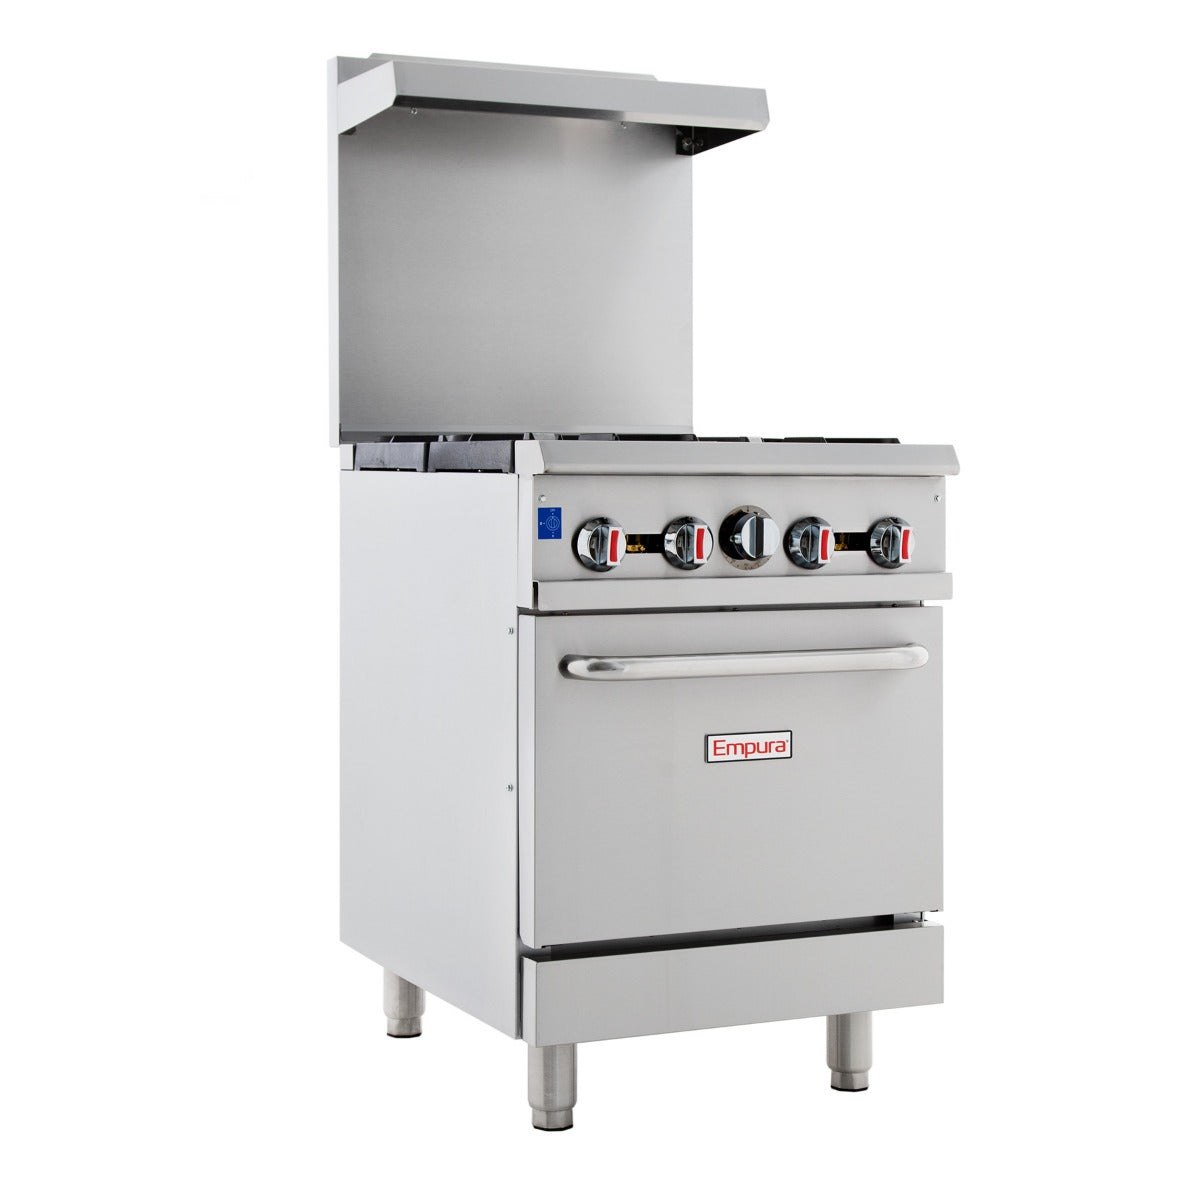 Empura EGR-24_LP 24" Stainless Steel Commercial Gas Range with Oven, 4 Burners - Liquid Propane Gas, 150,000 BTU